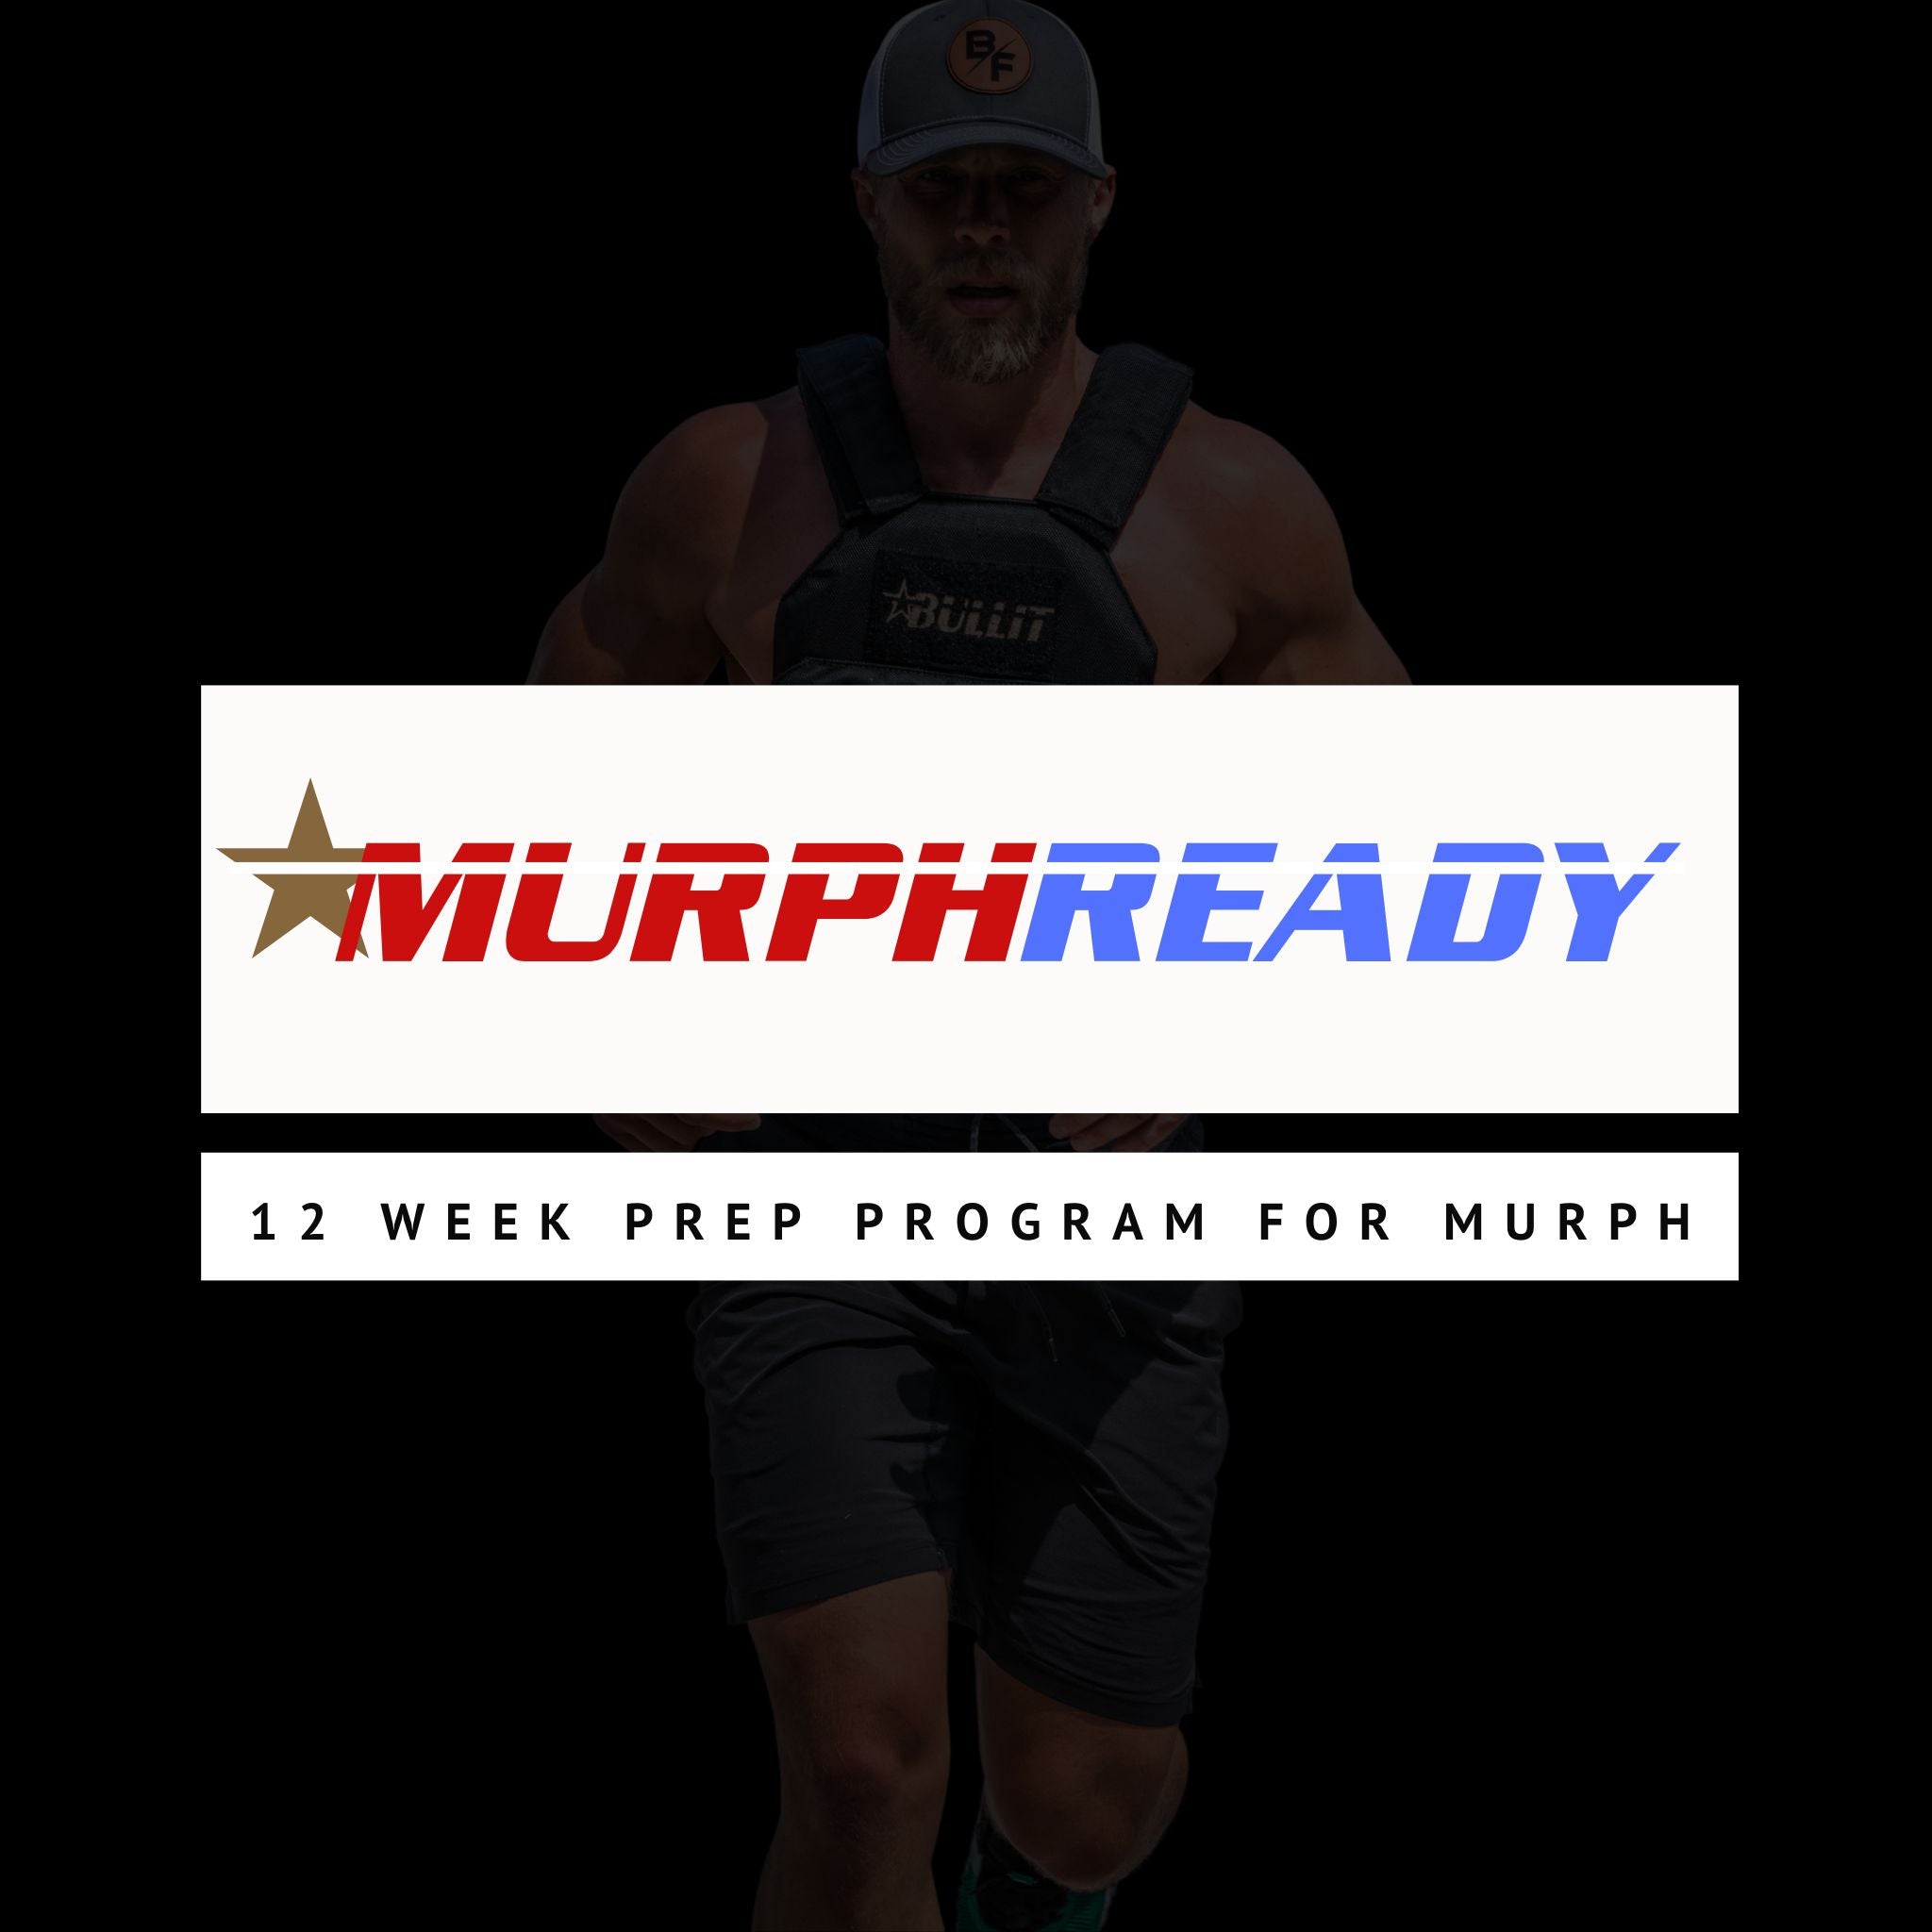 MURPH READY PROGRAM